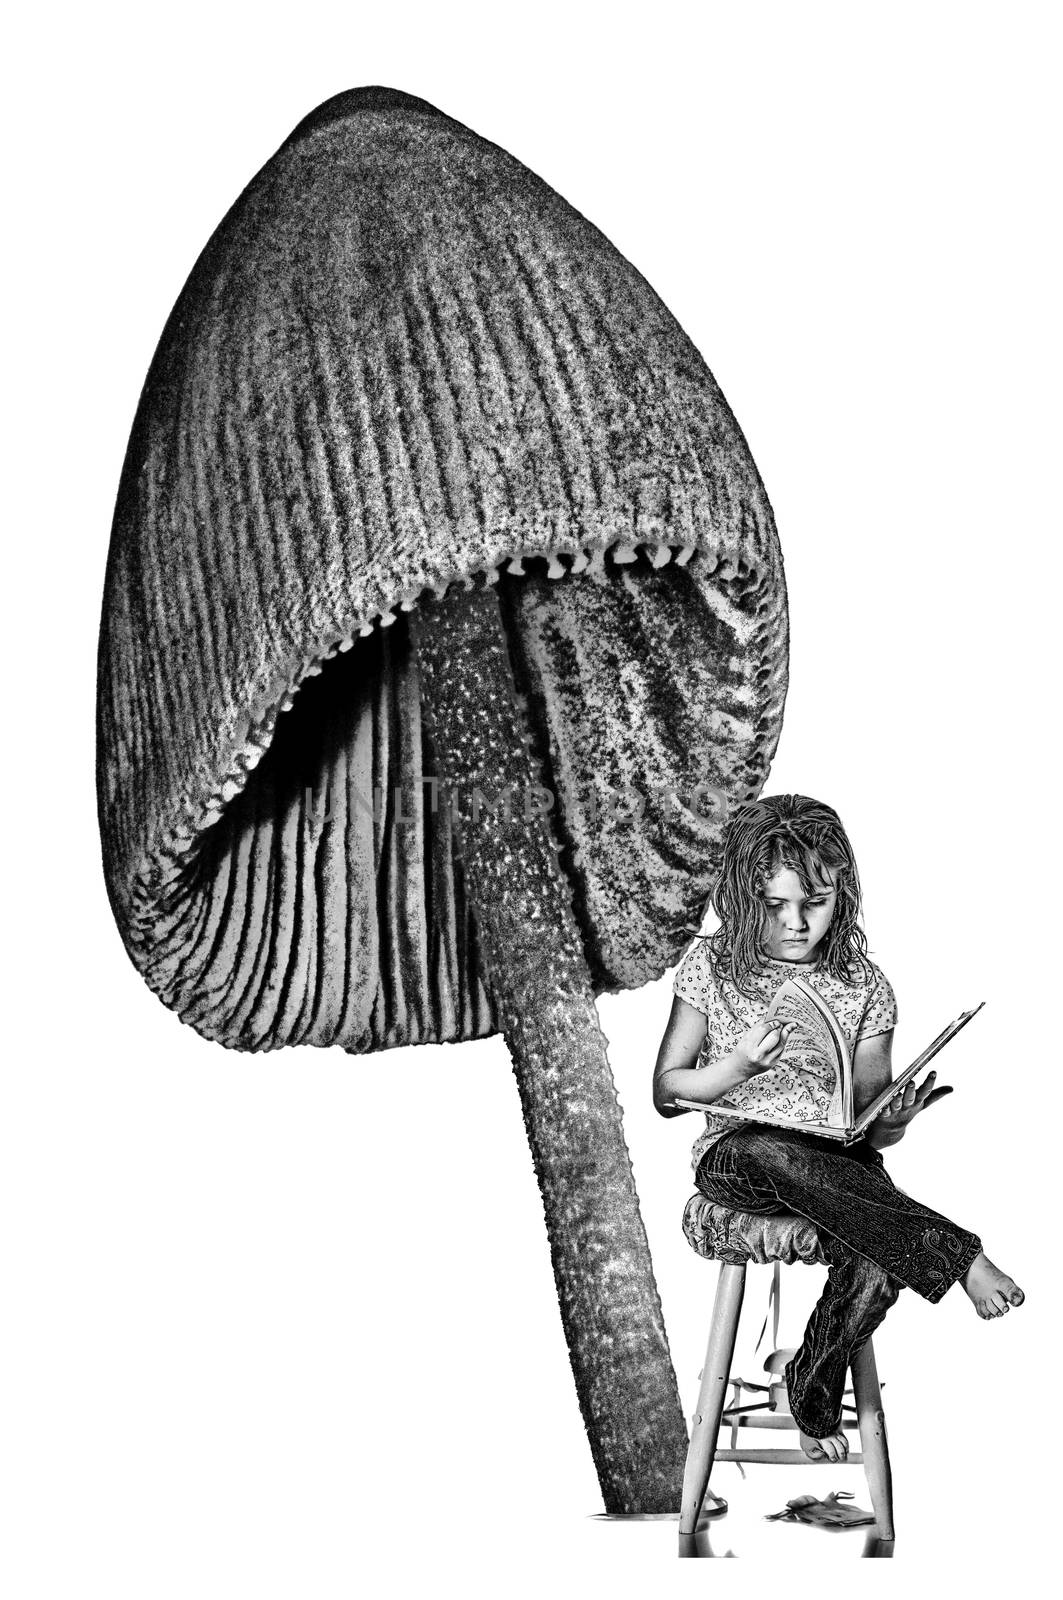 Little girl reading under a mushroom by rcarner